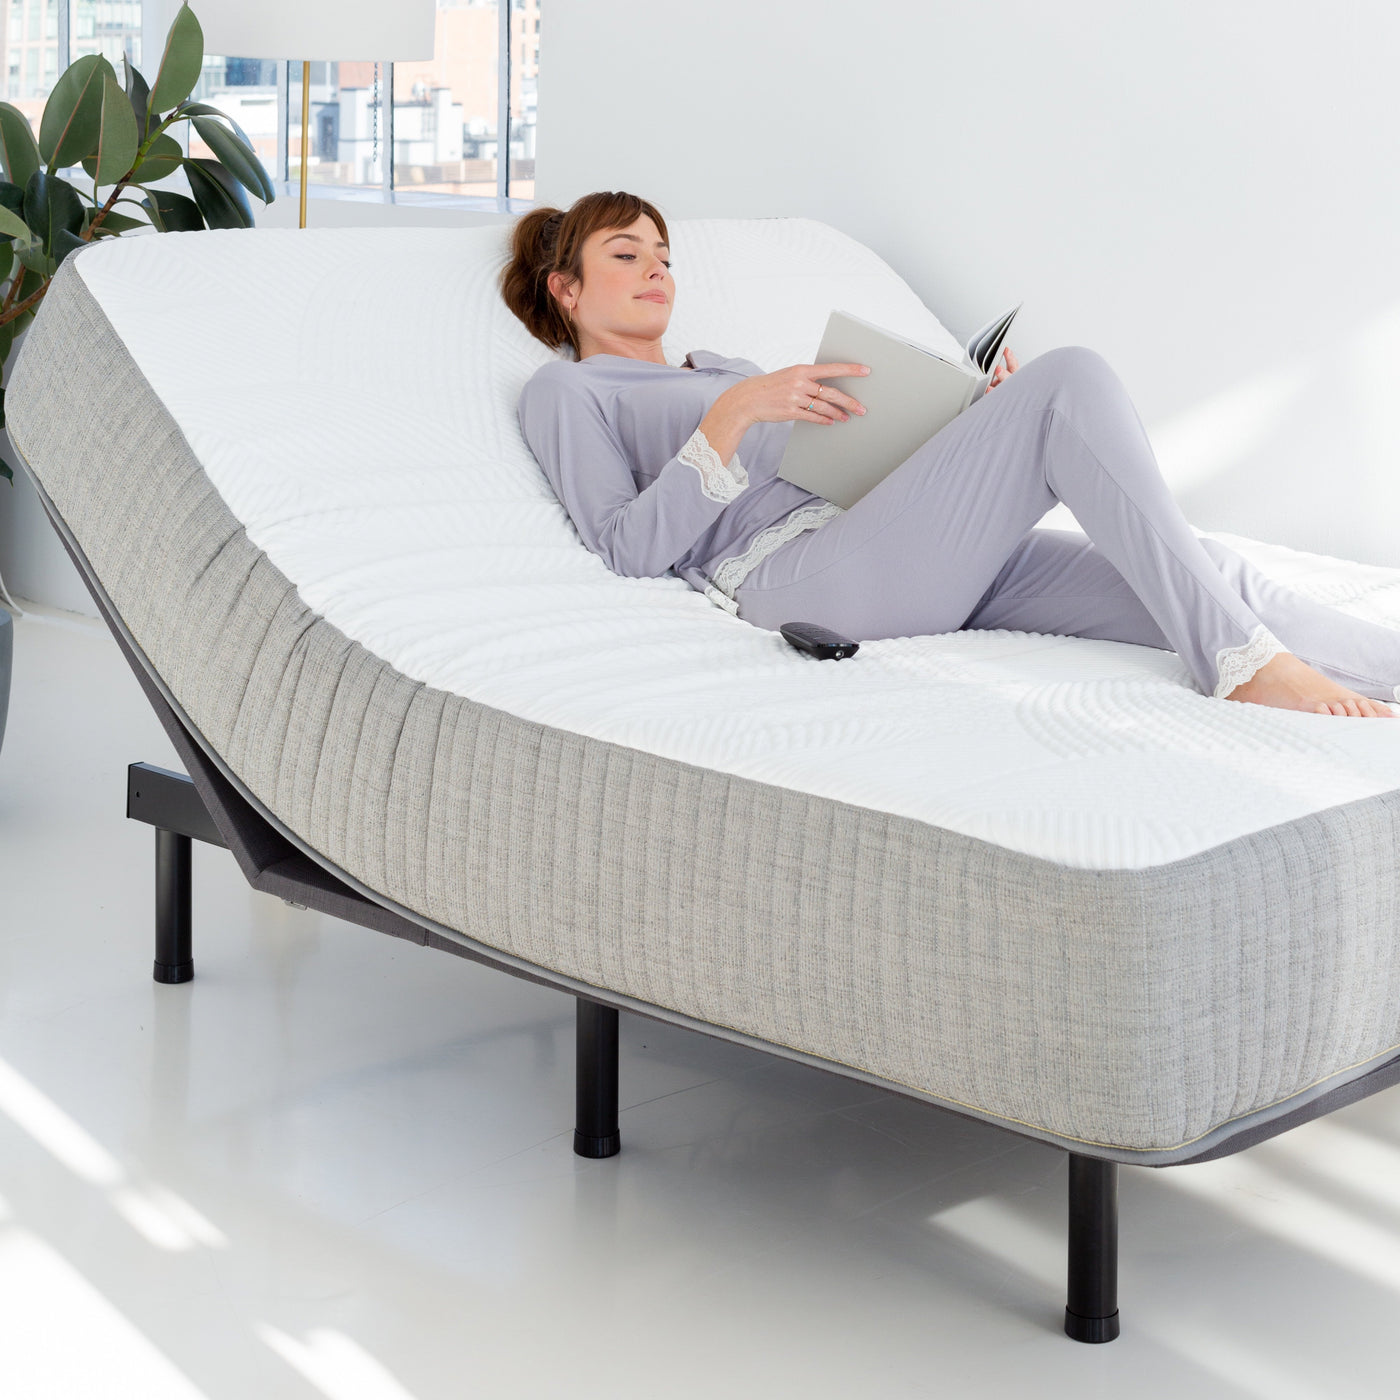 Contour Cool Leg Pillow with Innovative Cooler Memory Foam Construction